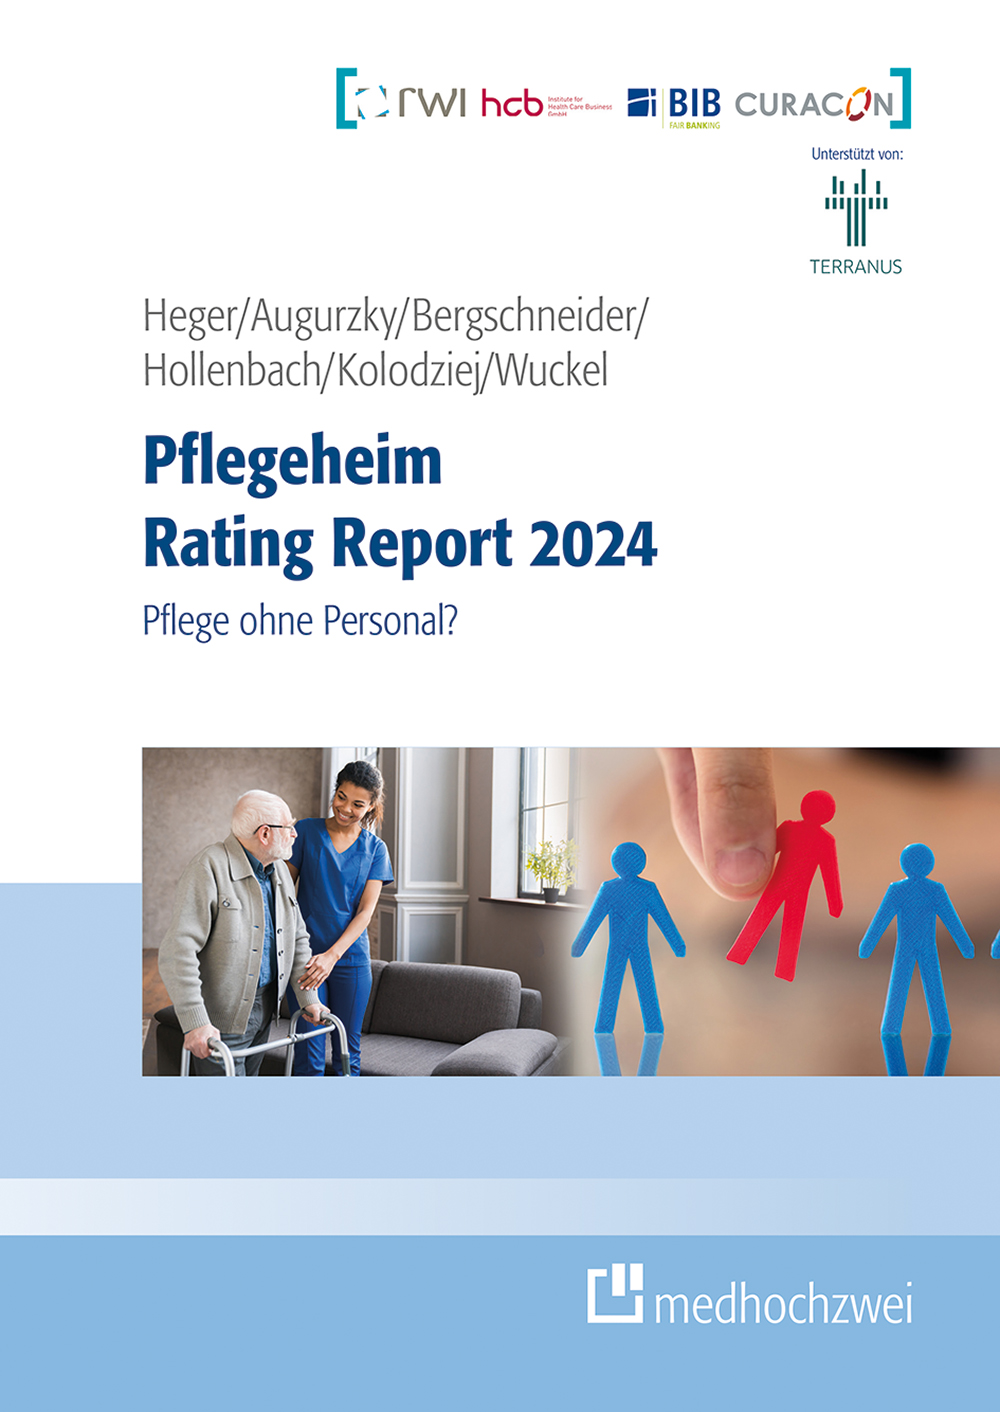 Neuer RWI Pflegeheim Rating Report: Pflege ohne Personal?